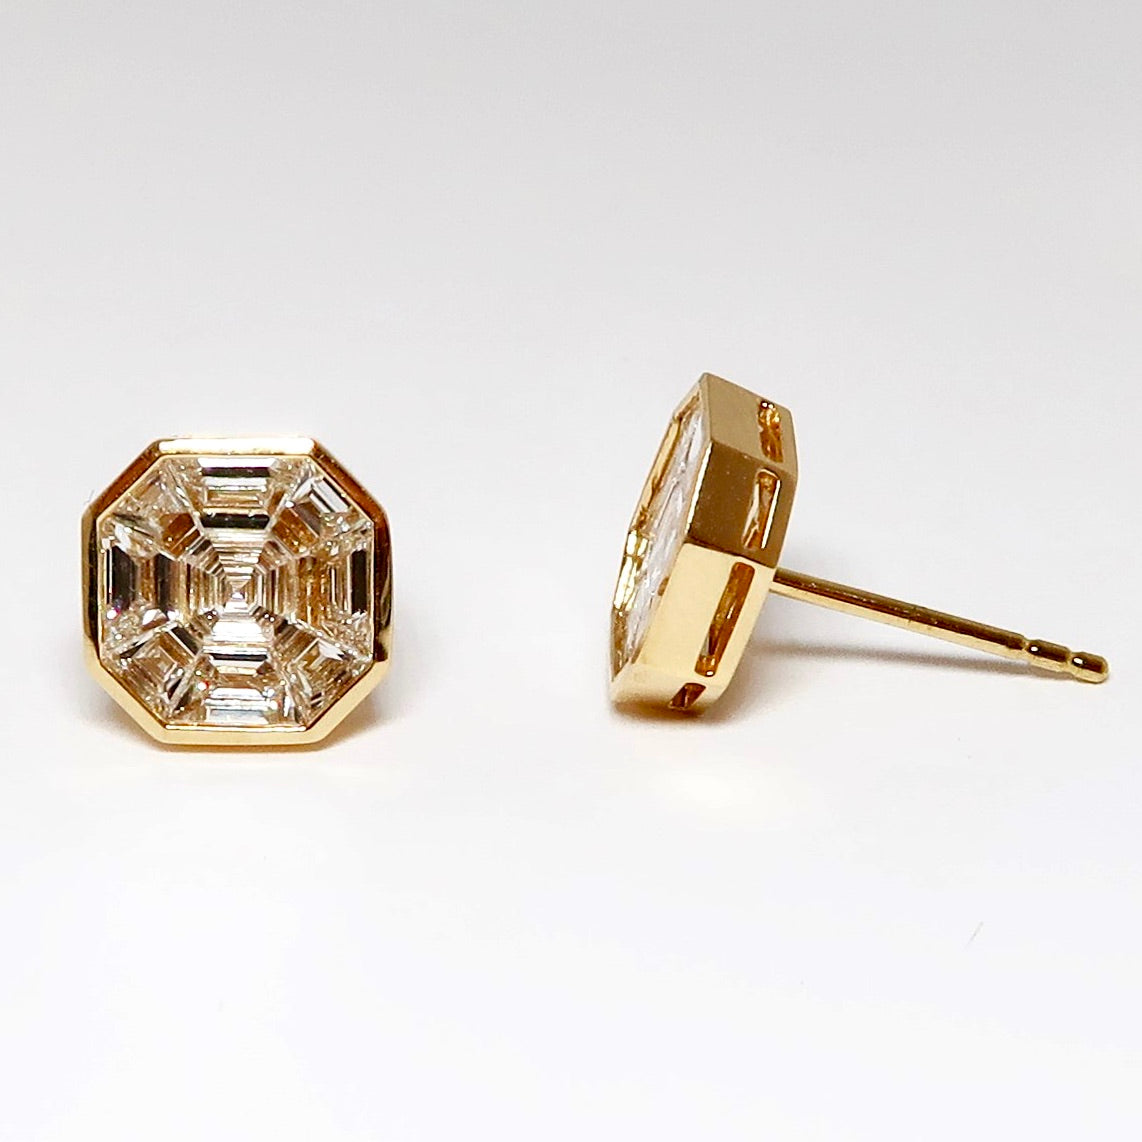 18k Yellow Gold Diamond Earrings, Cut Corner Square Mosaic of Diamonds